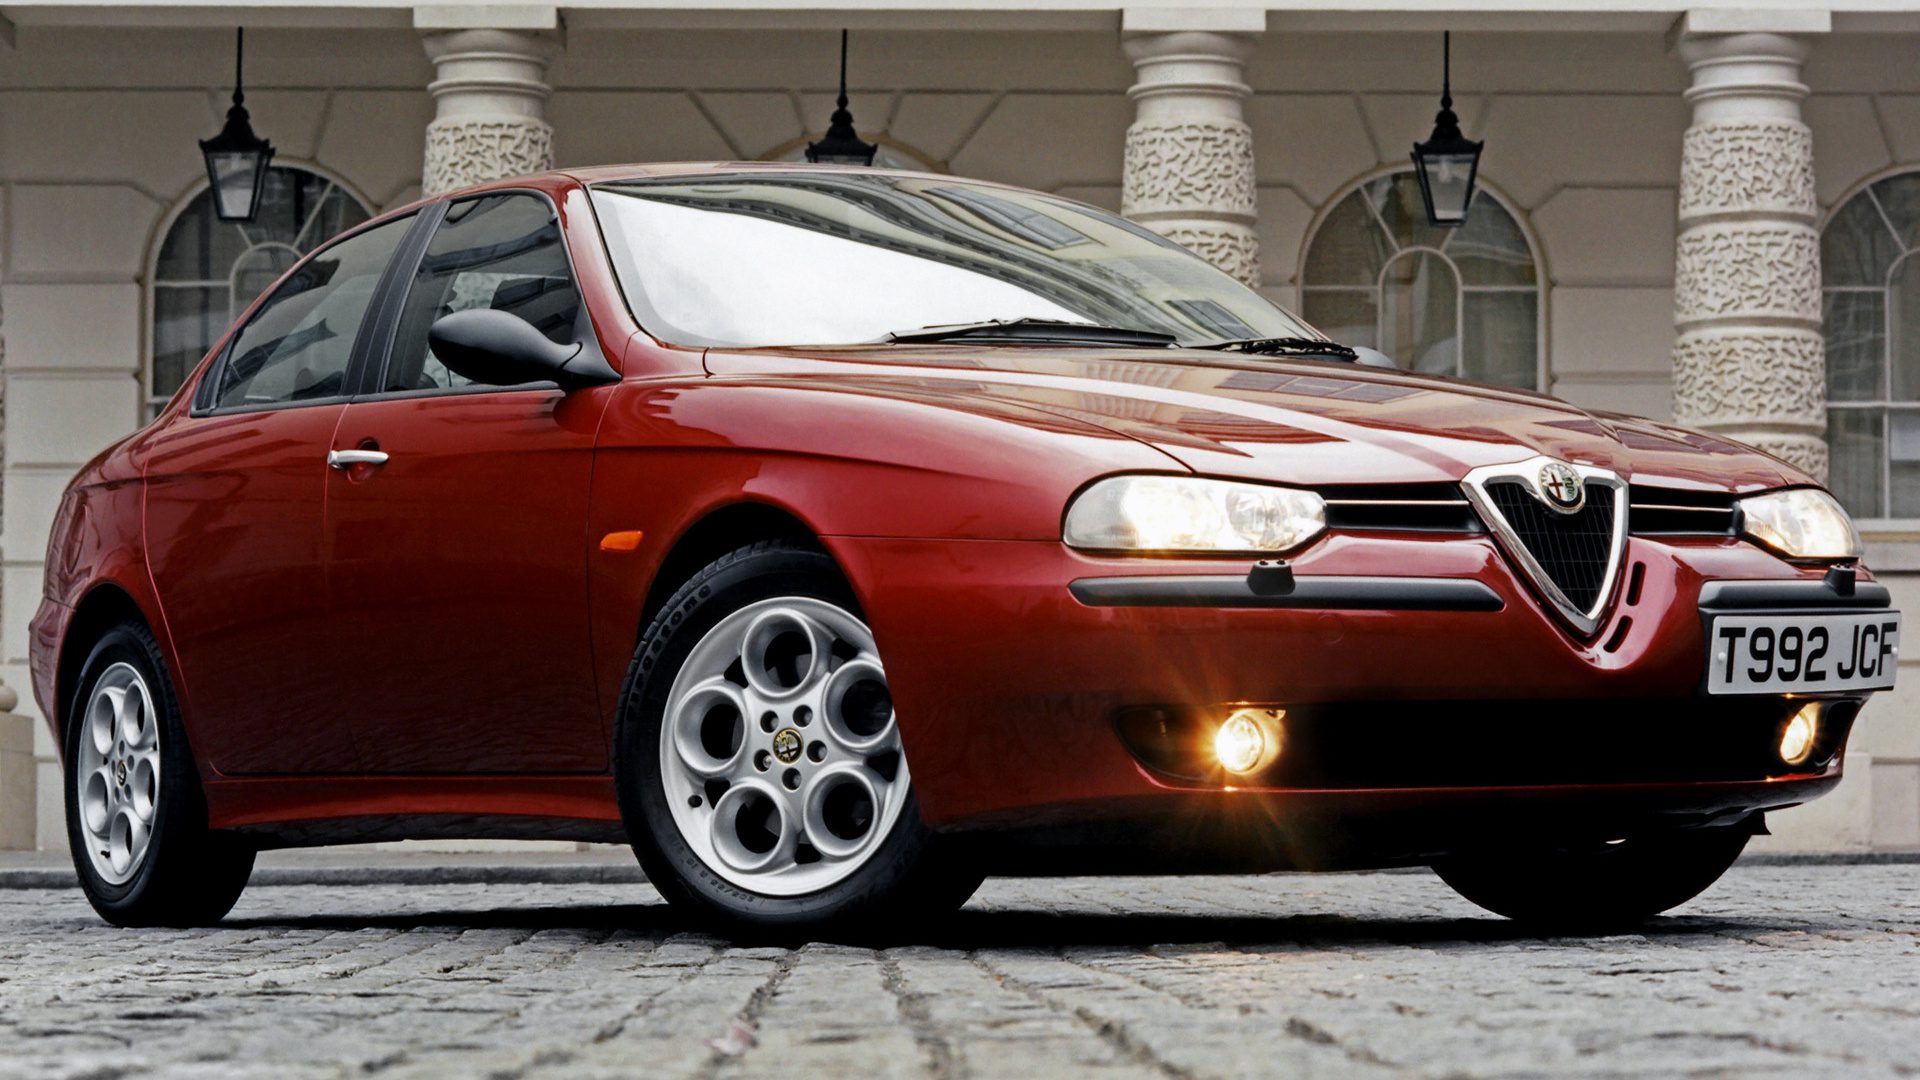 Used Alfa Romeo 159 review: 2006-2012